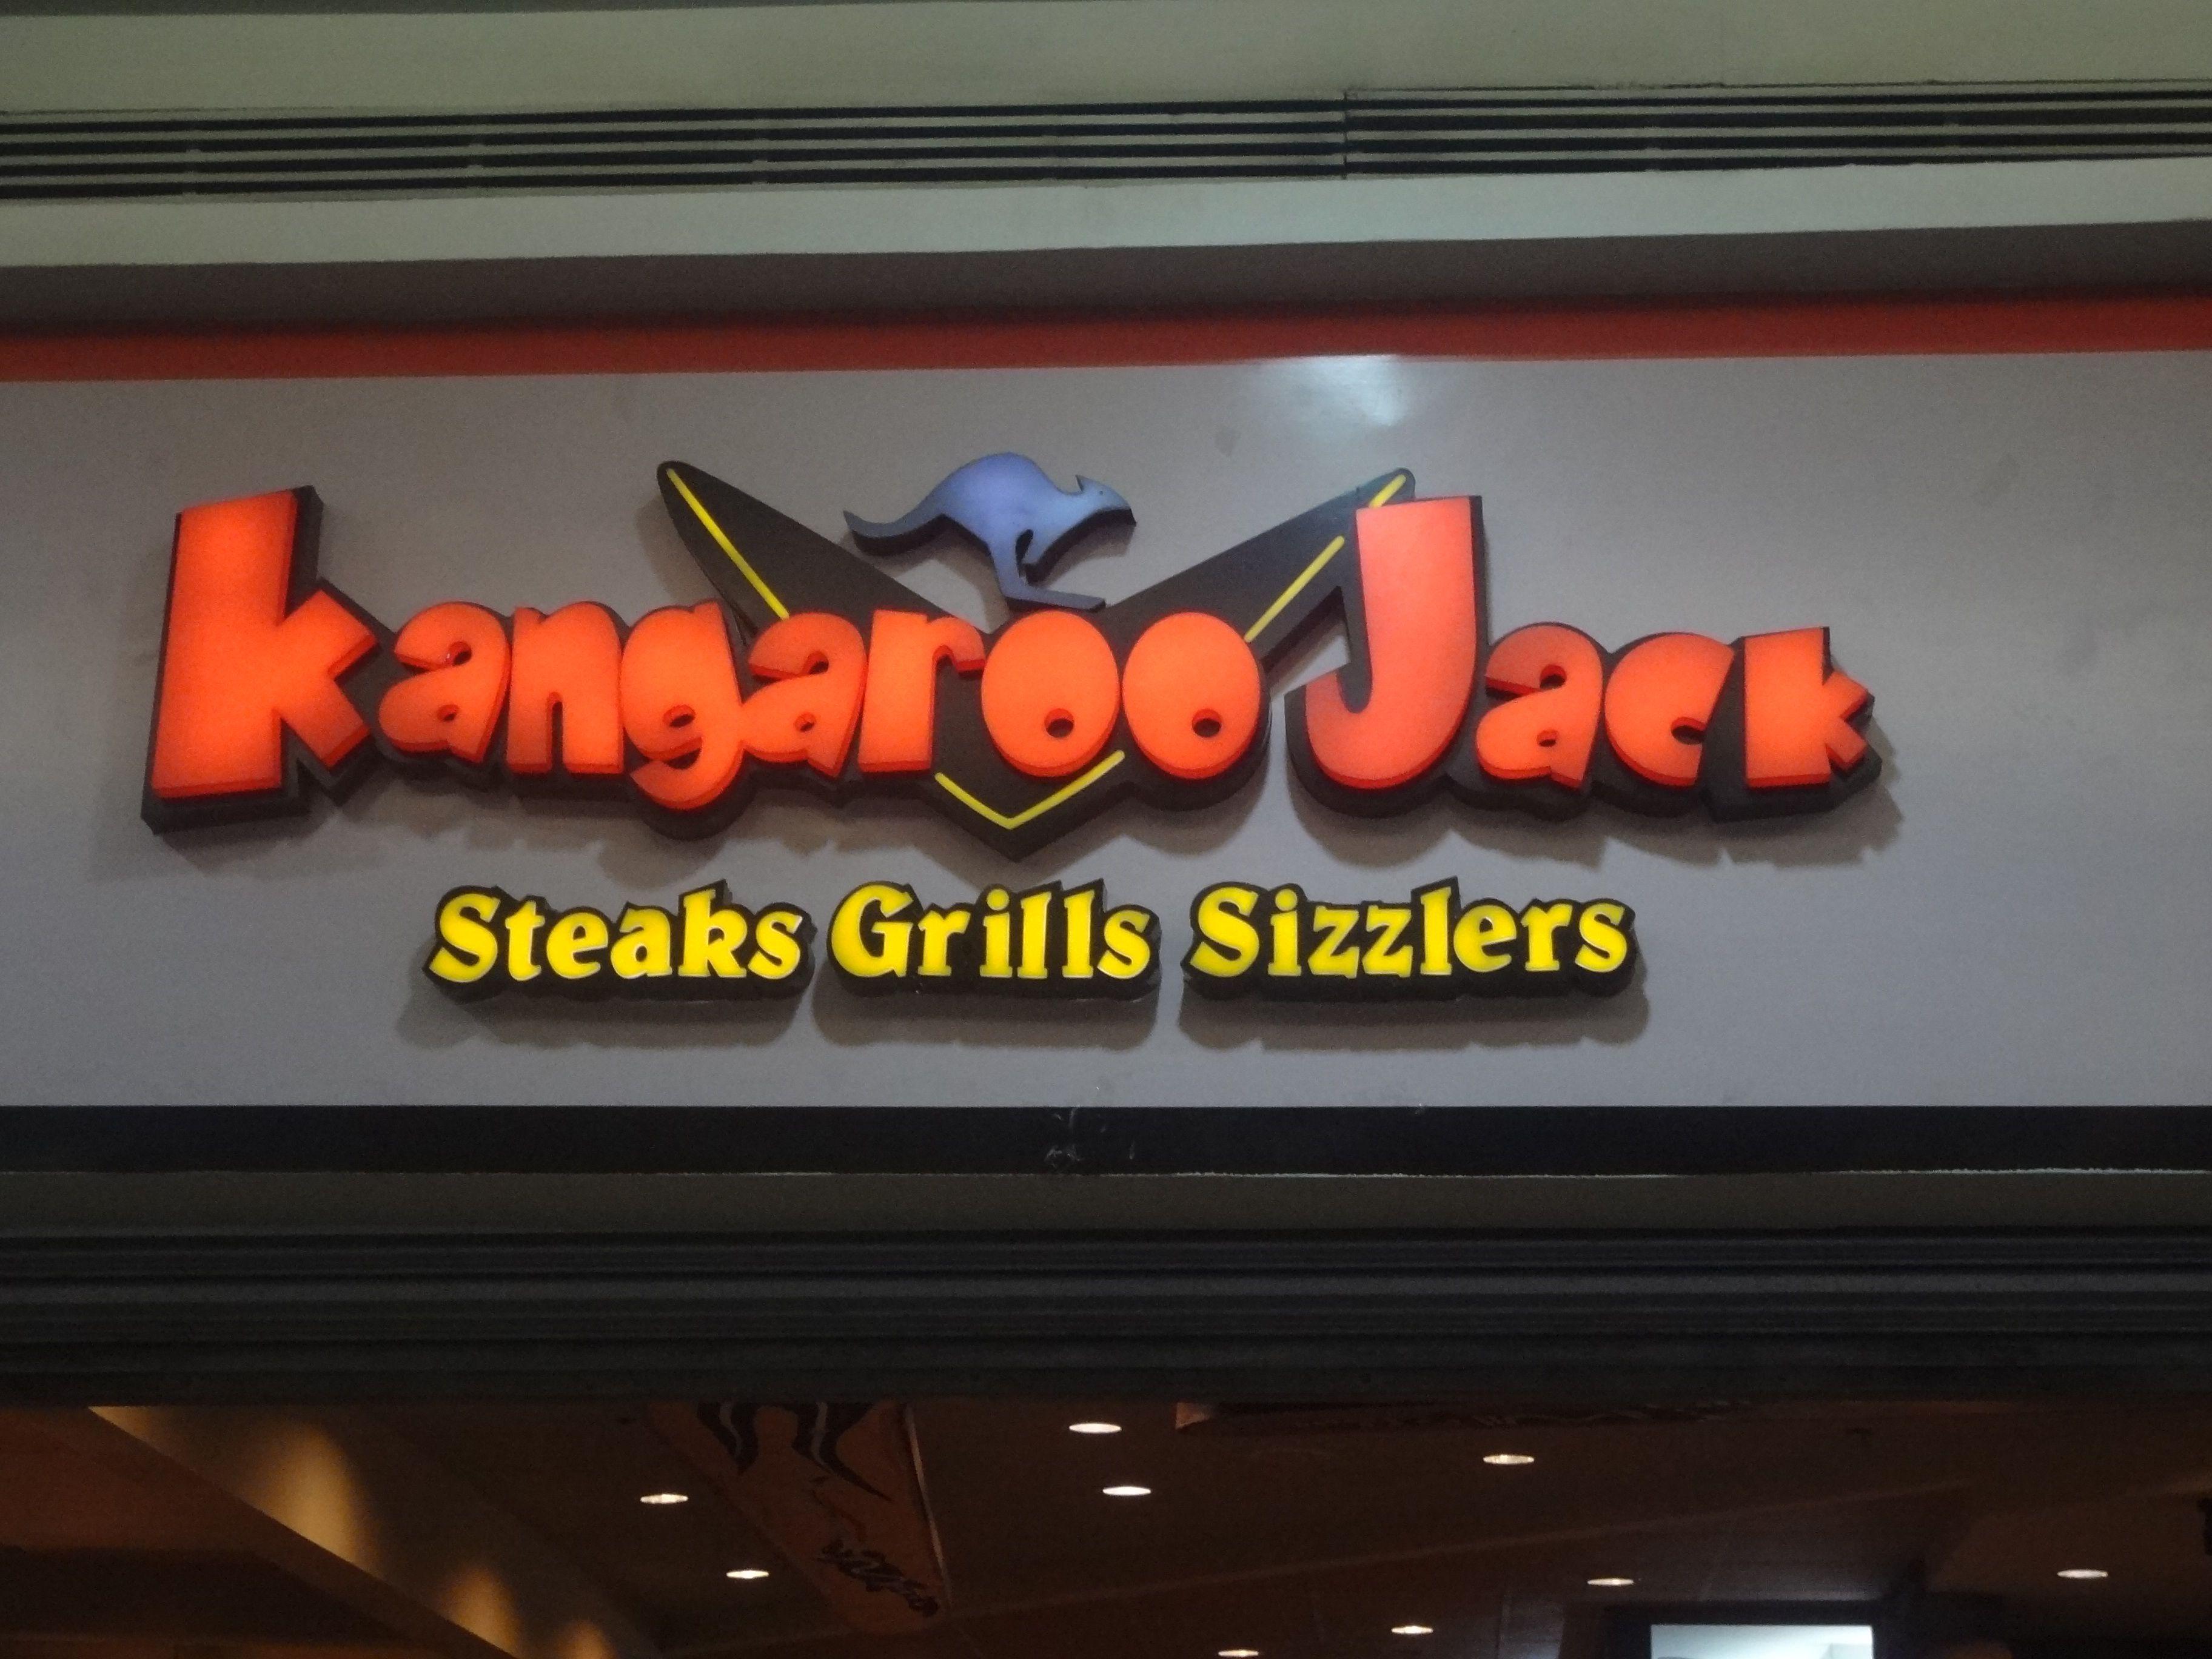 Kangaroo Restaurant Logo - Kangaroo Jack, SM City Manila | accordingtovenice